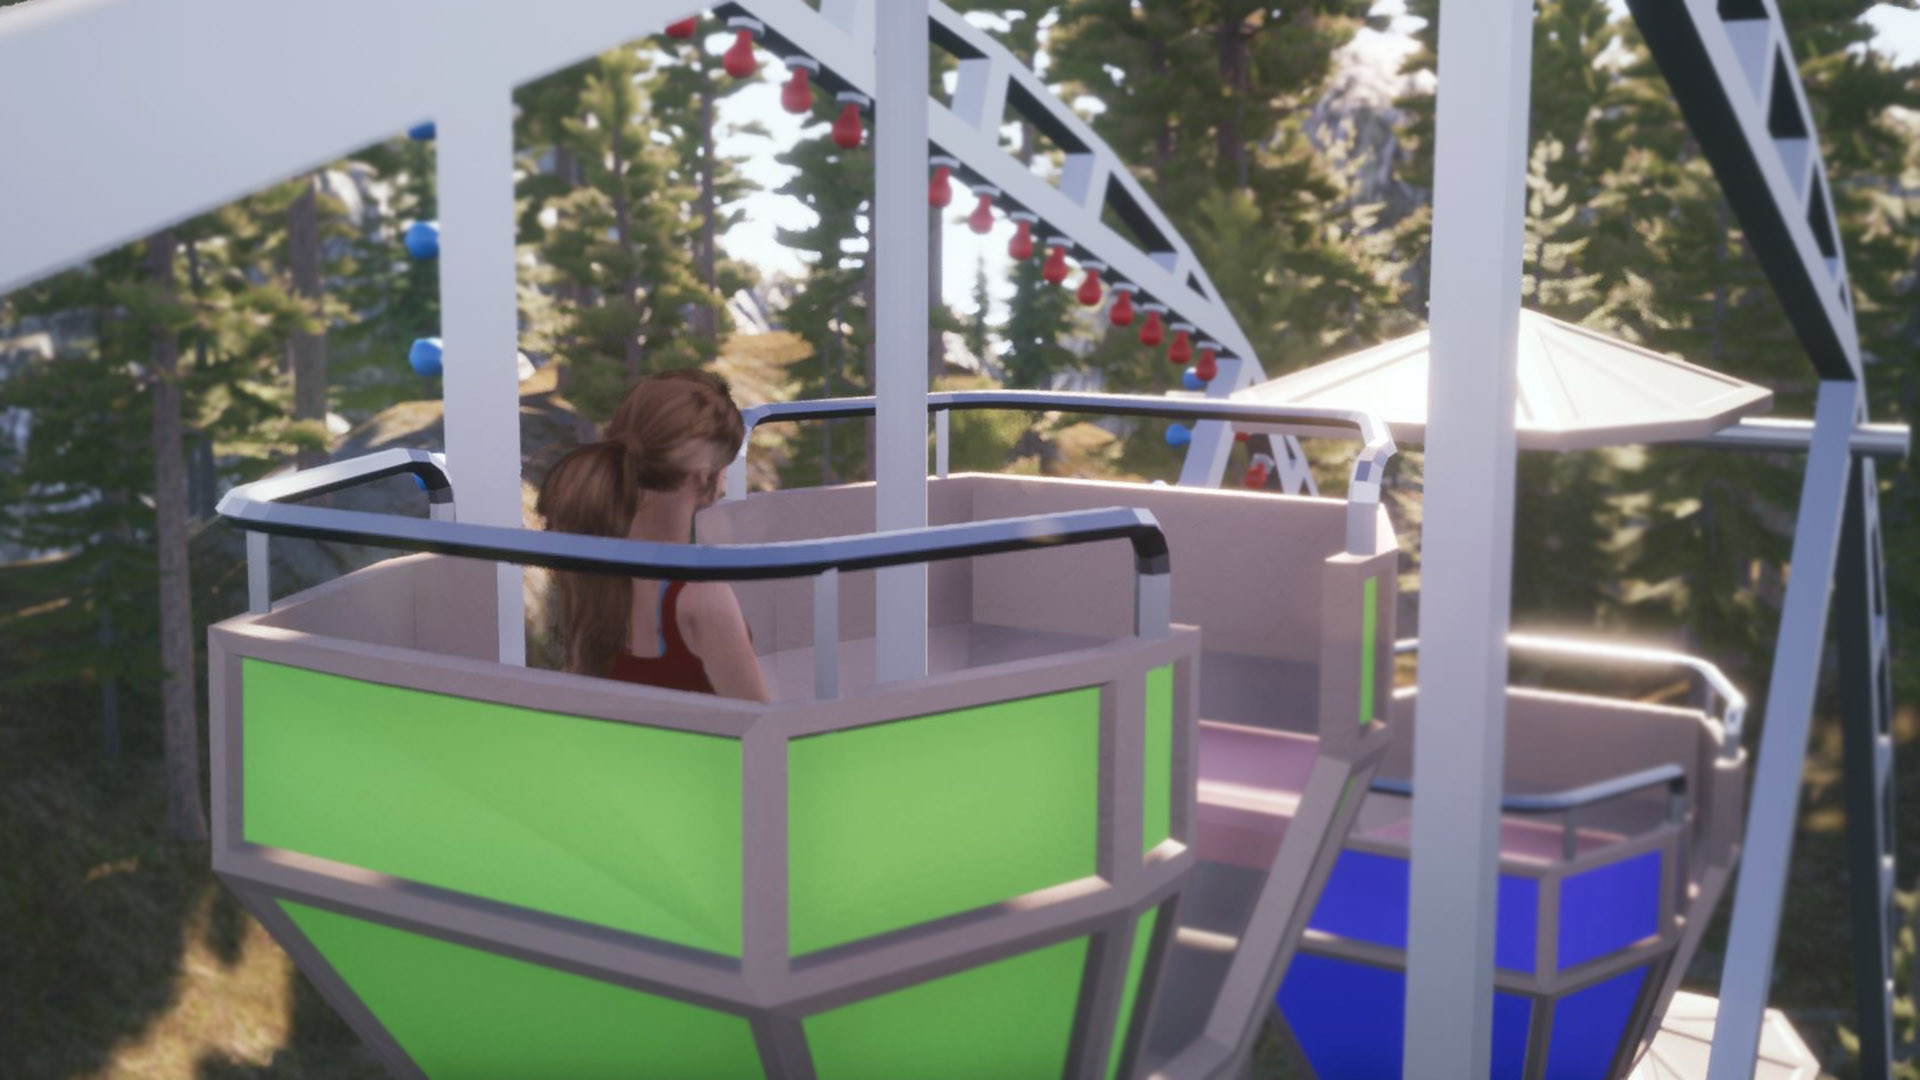 RideOp - Thrill Ride Simulator Free Download